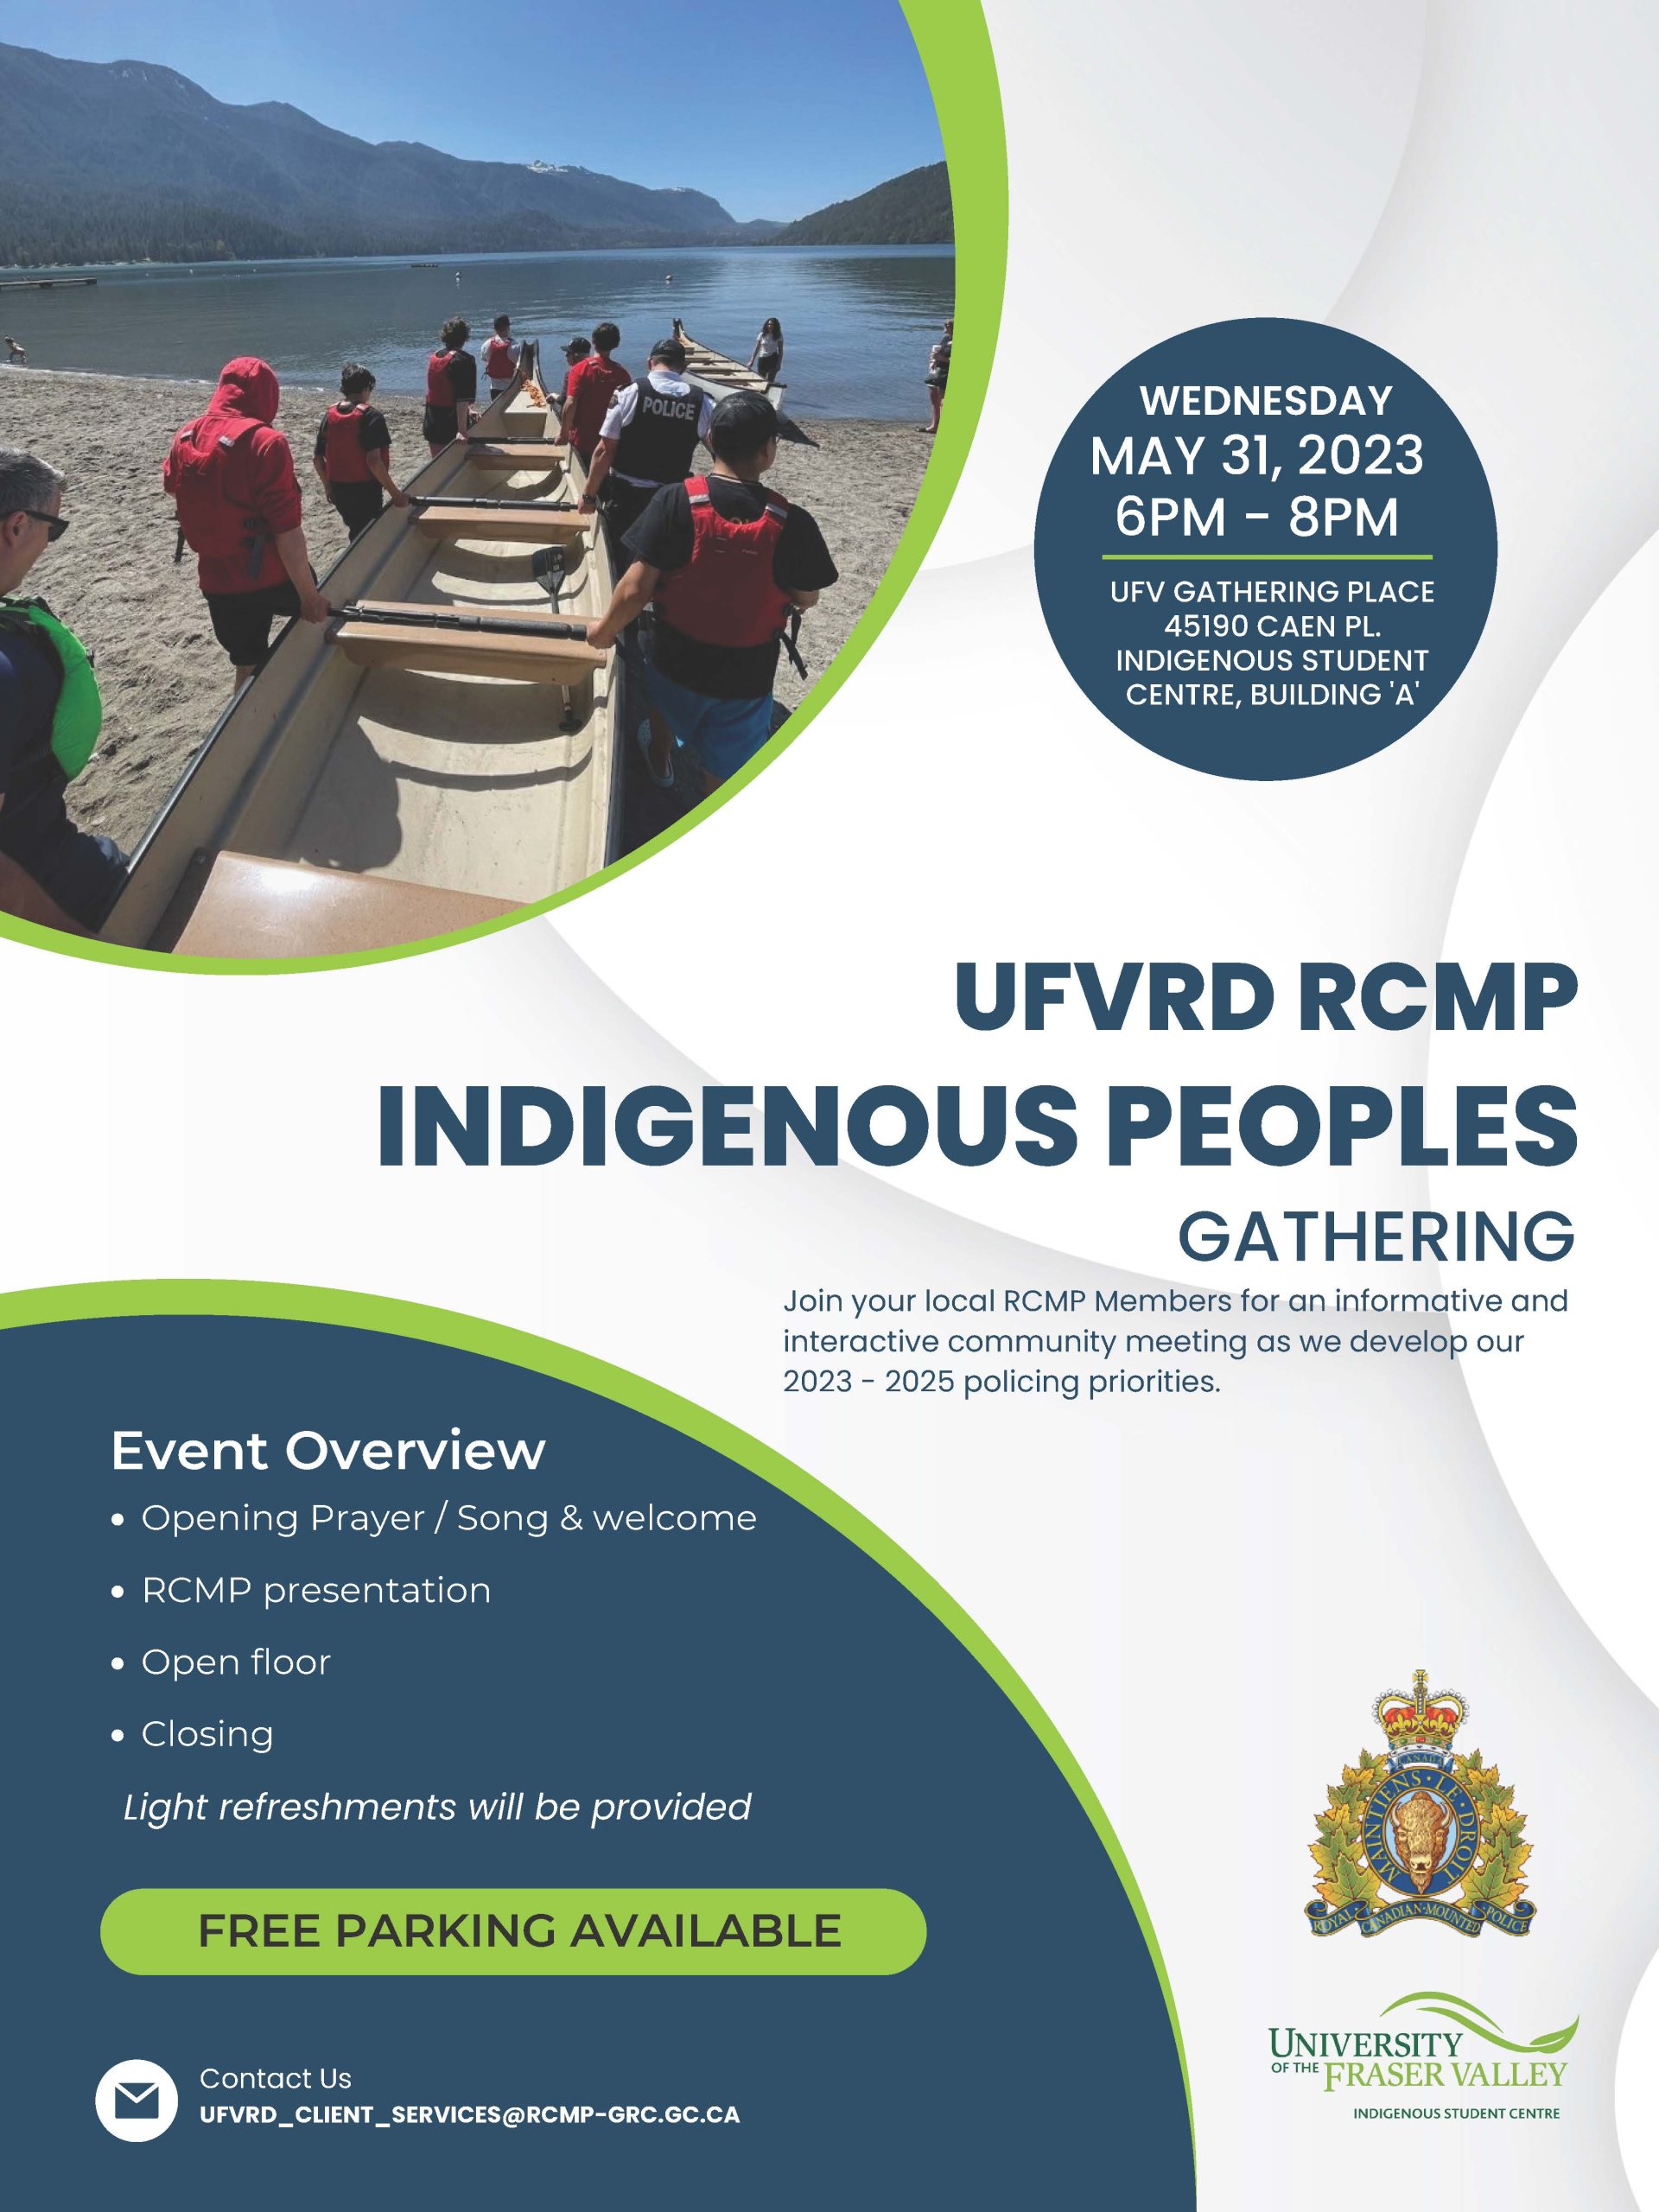 UFVRD R.C.M.P Indigenous Peoples Gathering